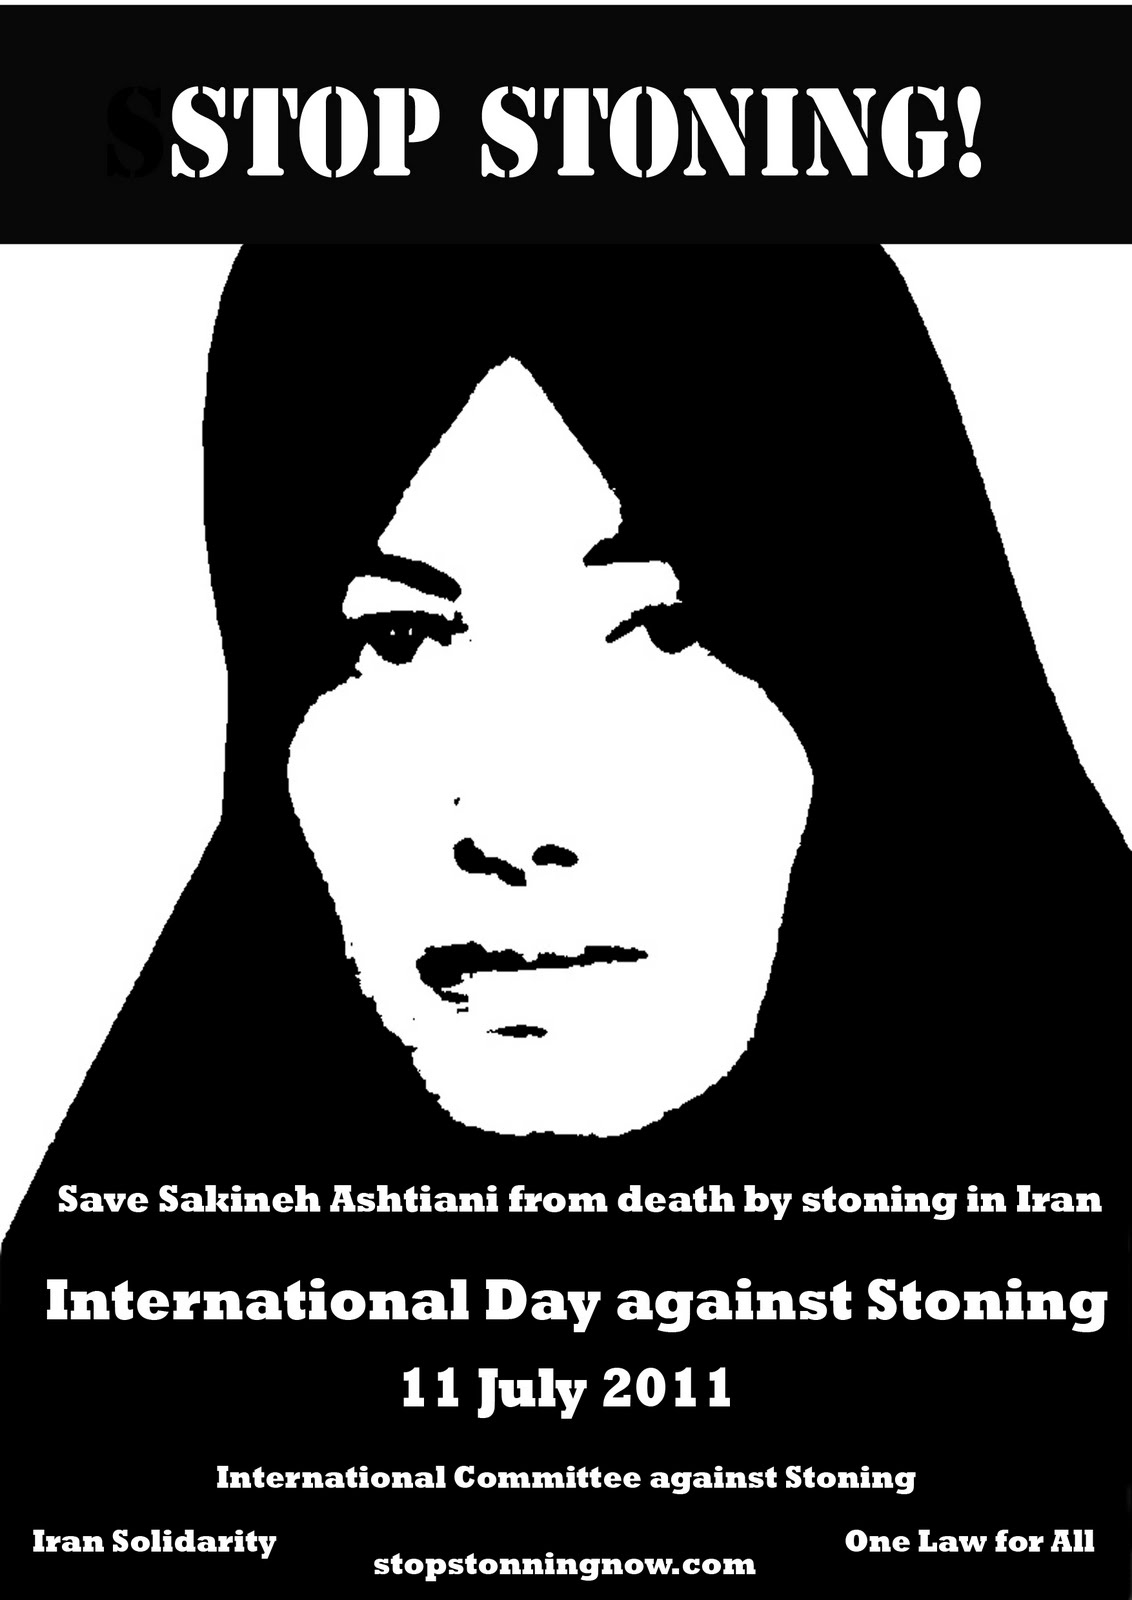 Support International Day Against Stoning, Richard Dawkins Foundation